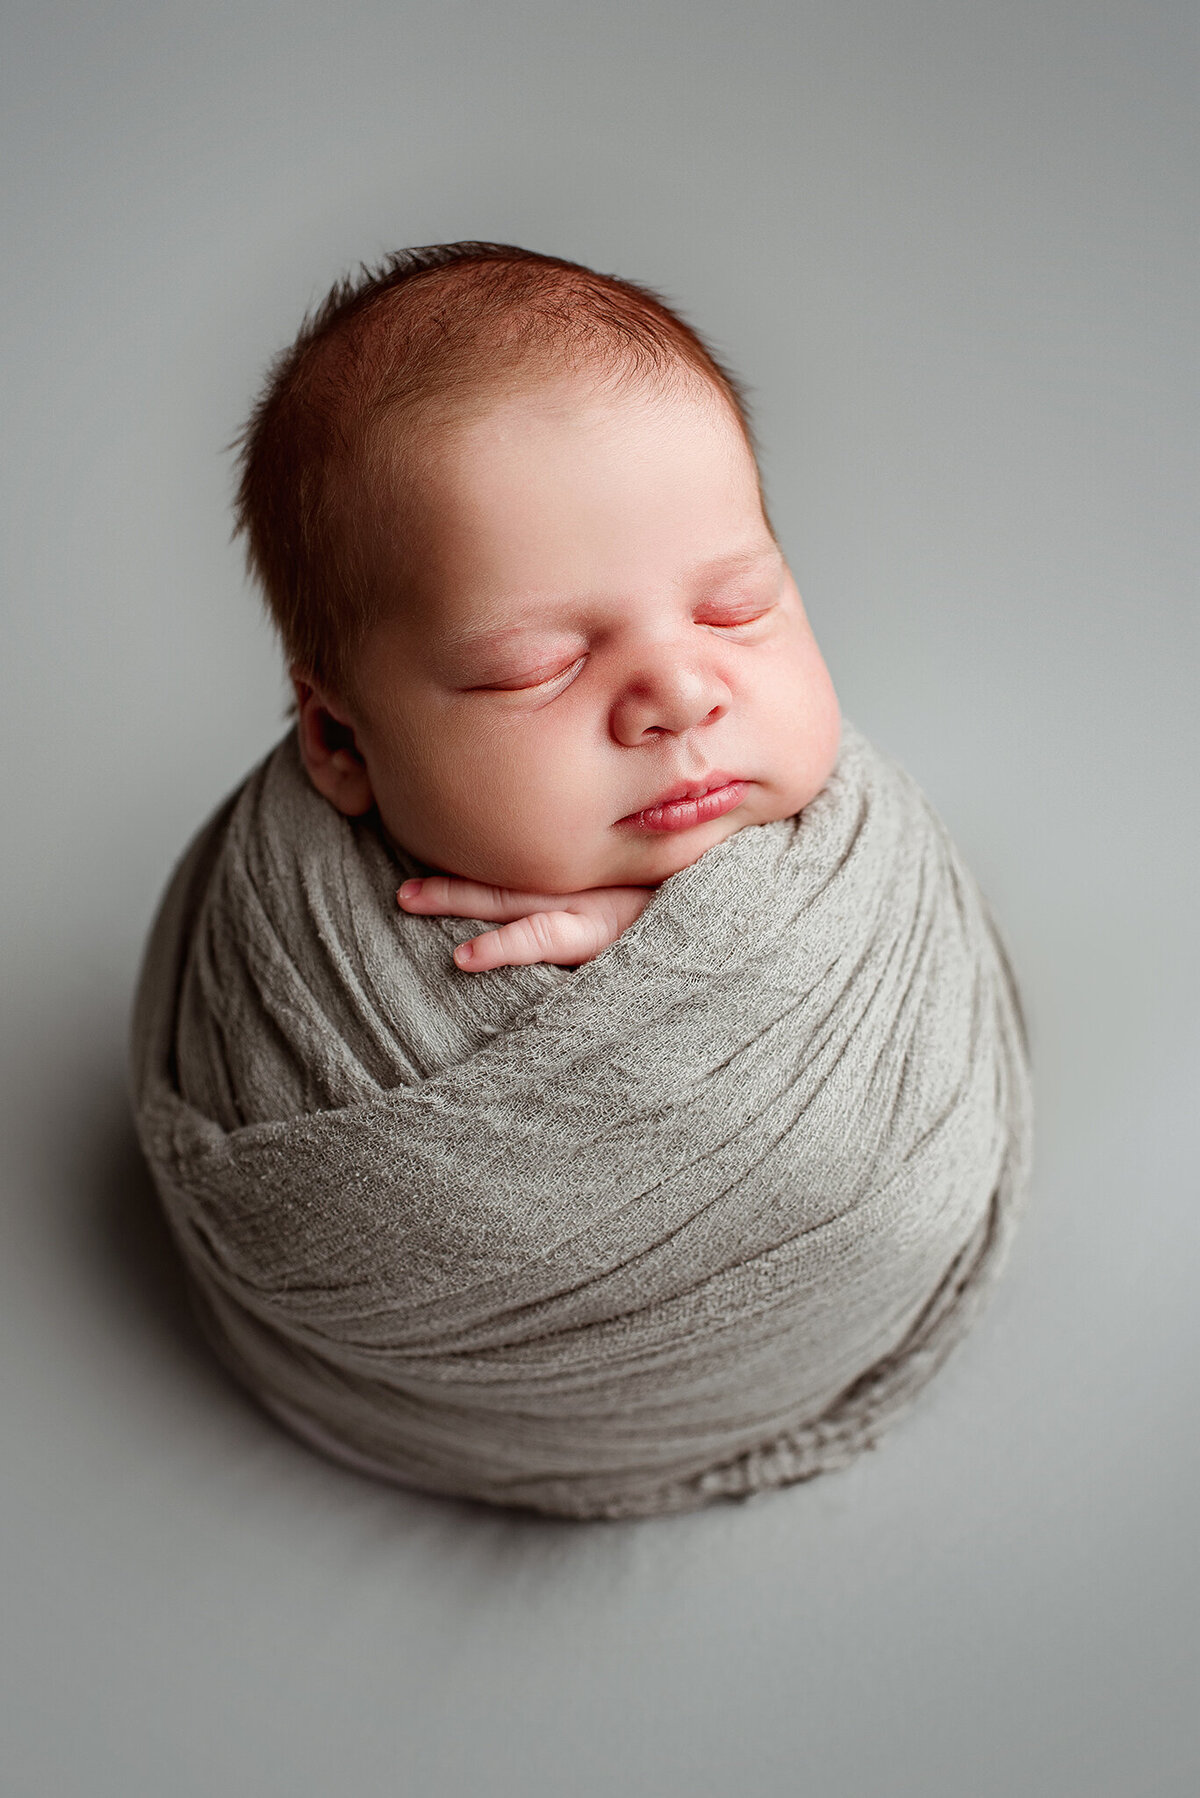 In home studio newborn portrait of baby boy wrapped in gray in St. Johns, FL.